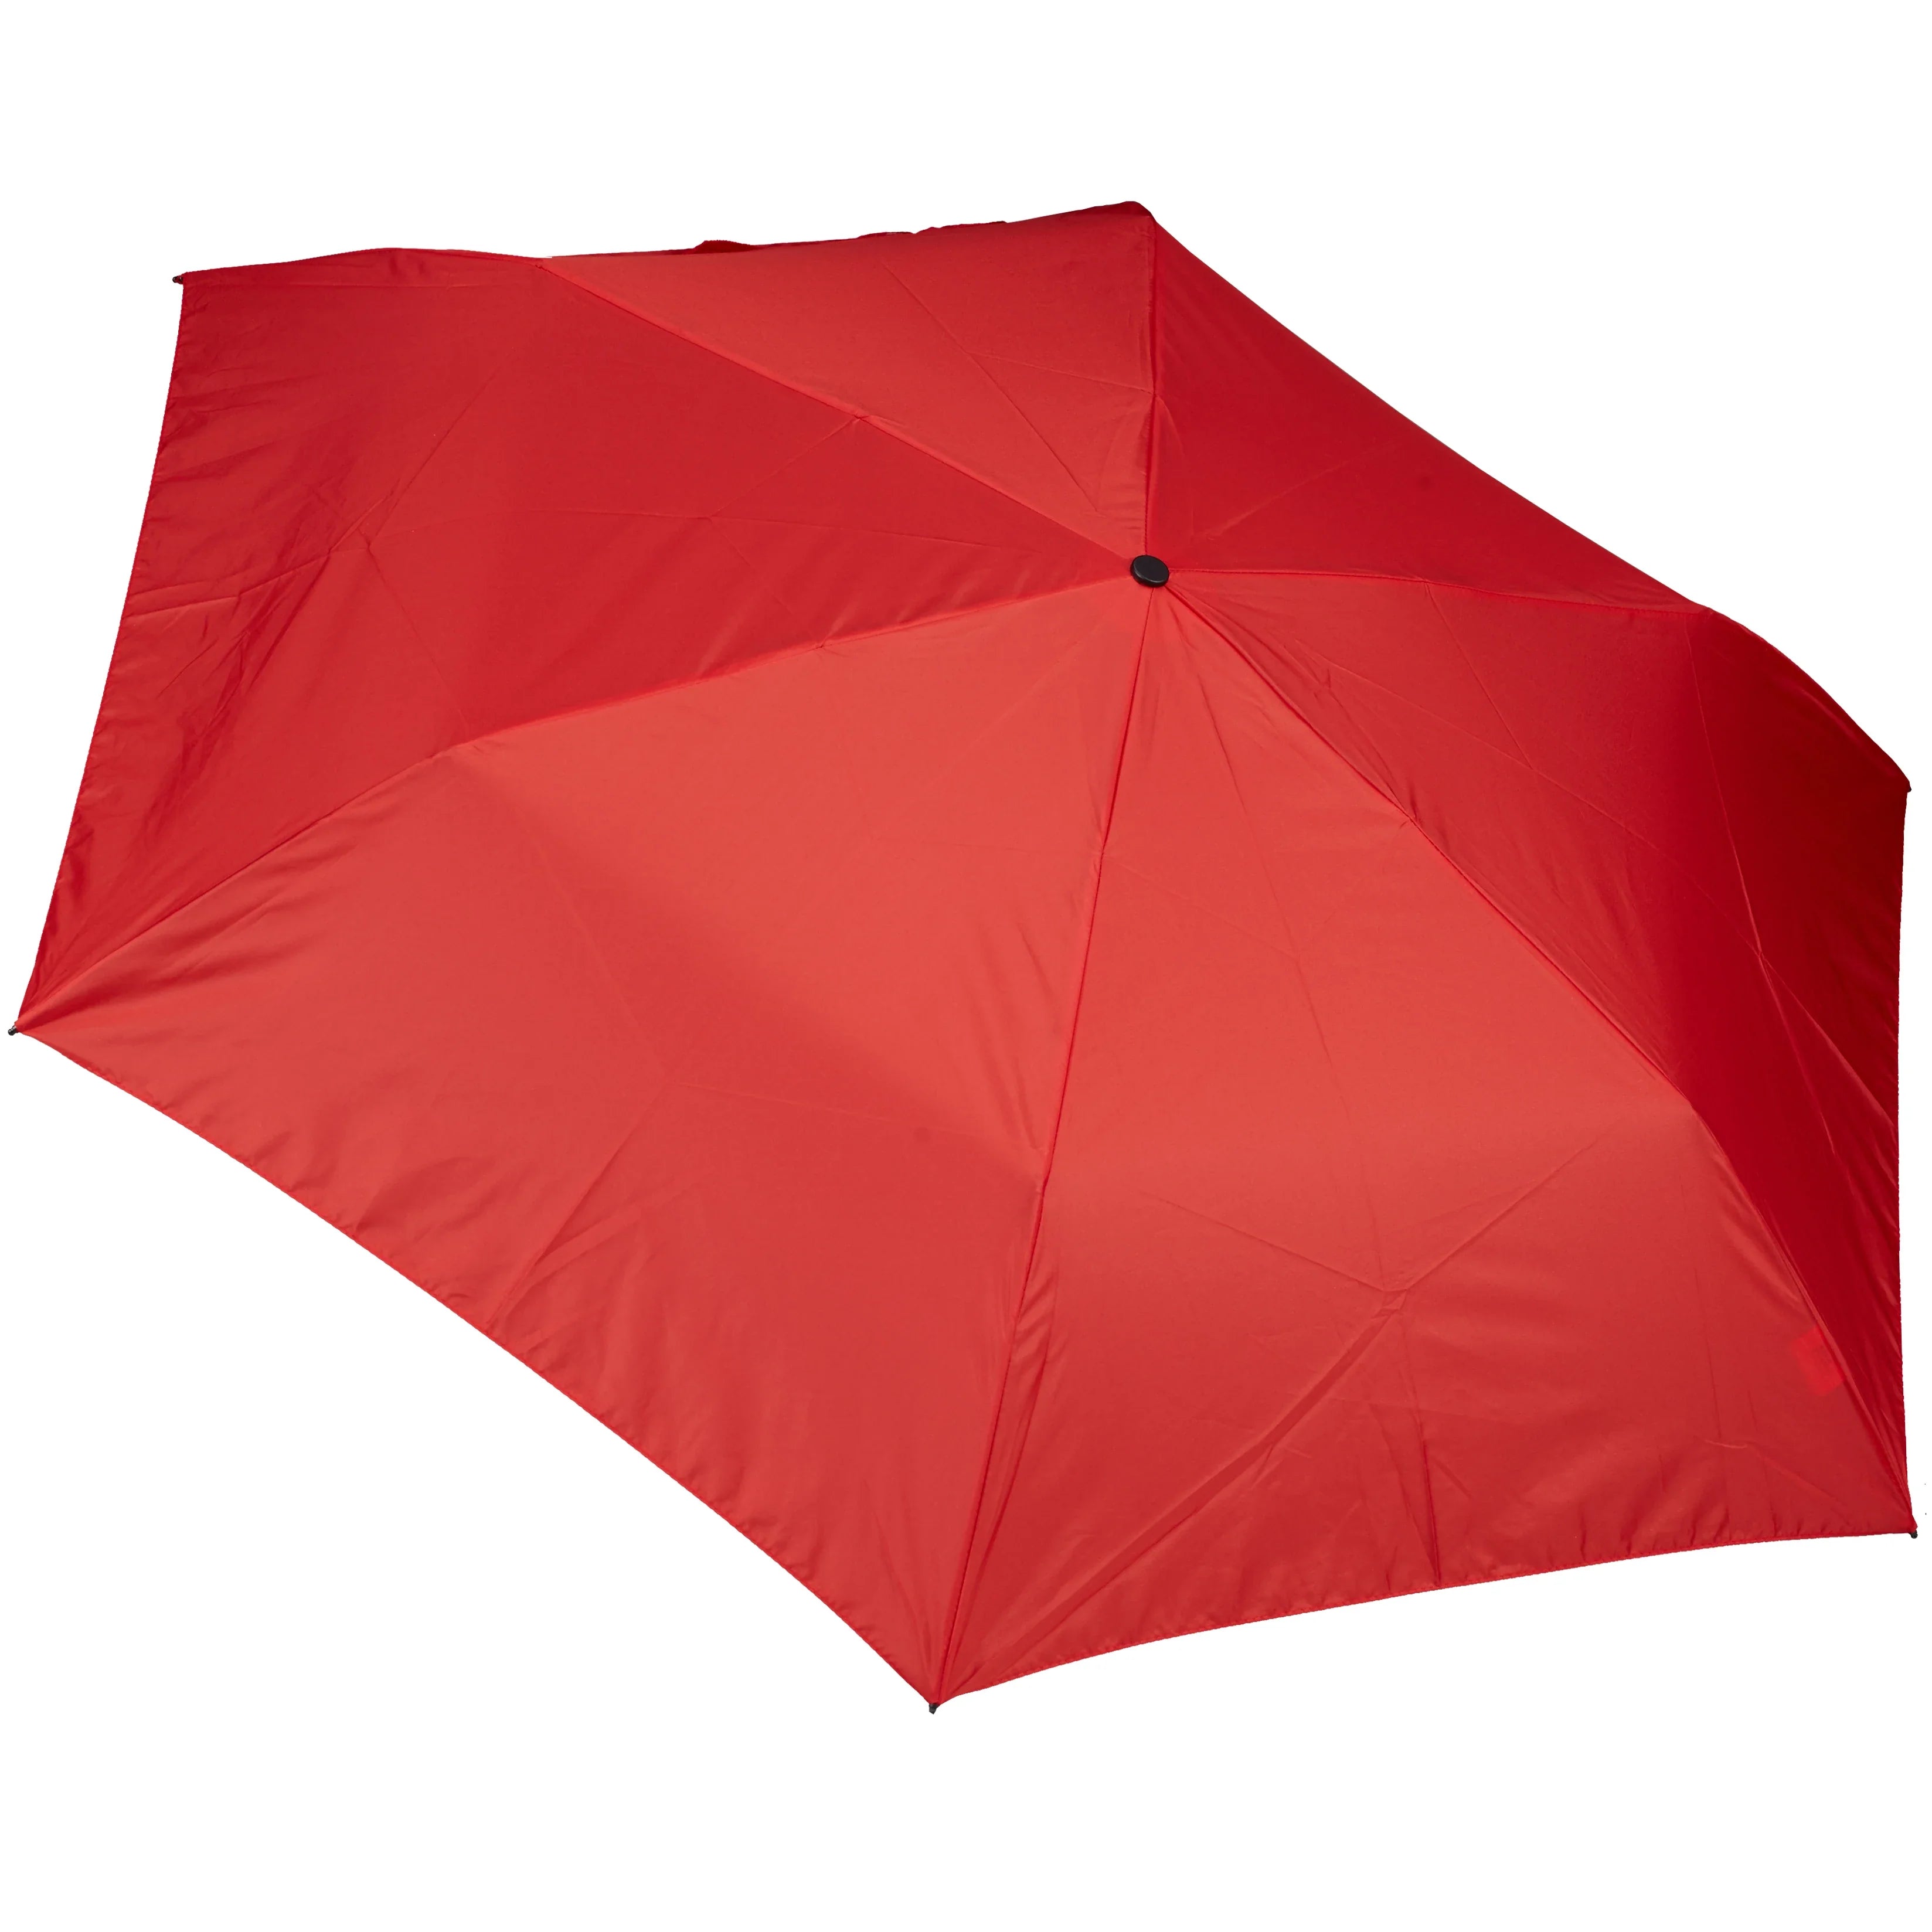 21 umbrella Doppler black cm pocket pocket - Zero99 umbrellas